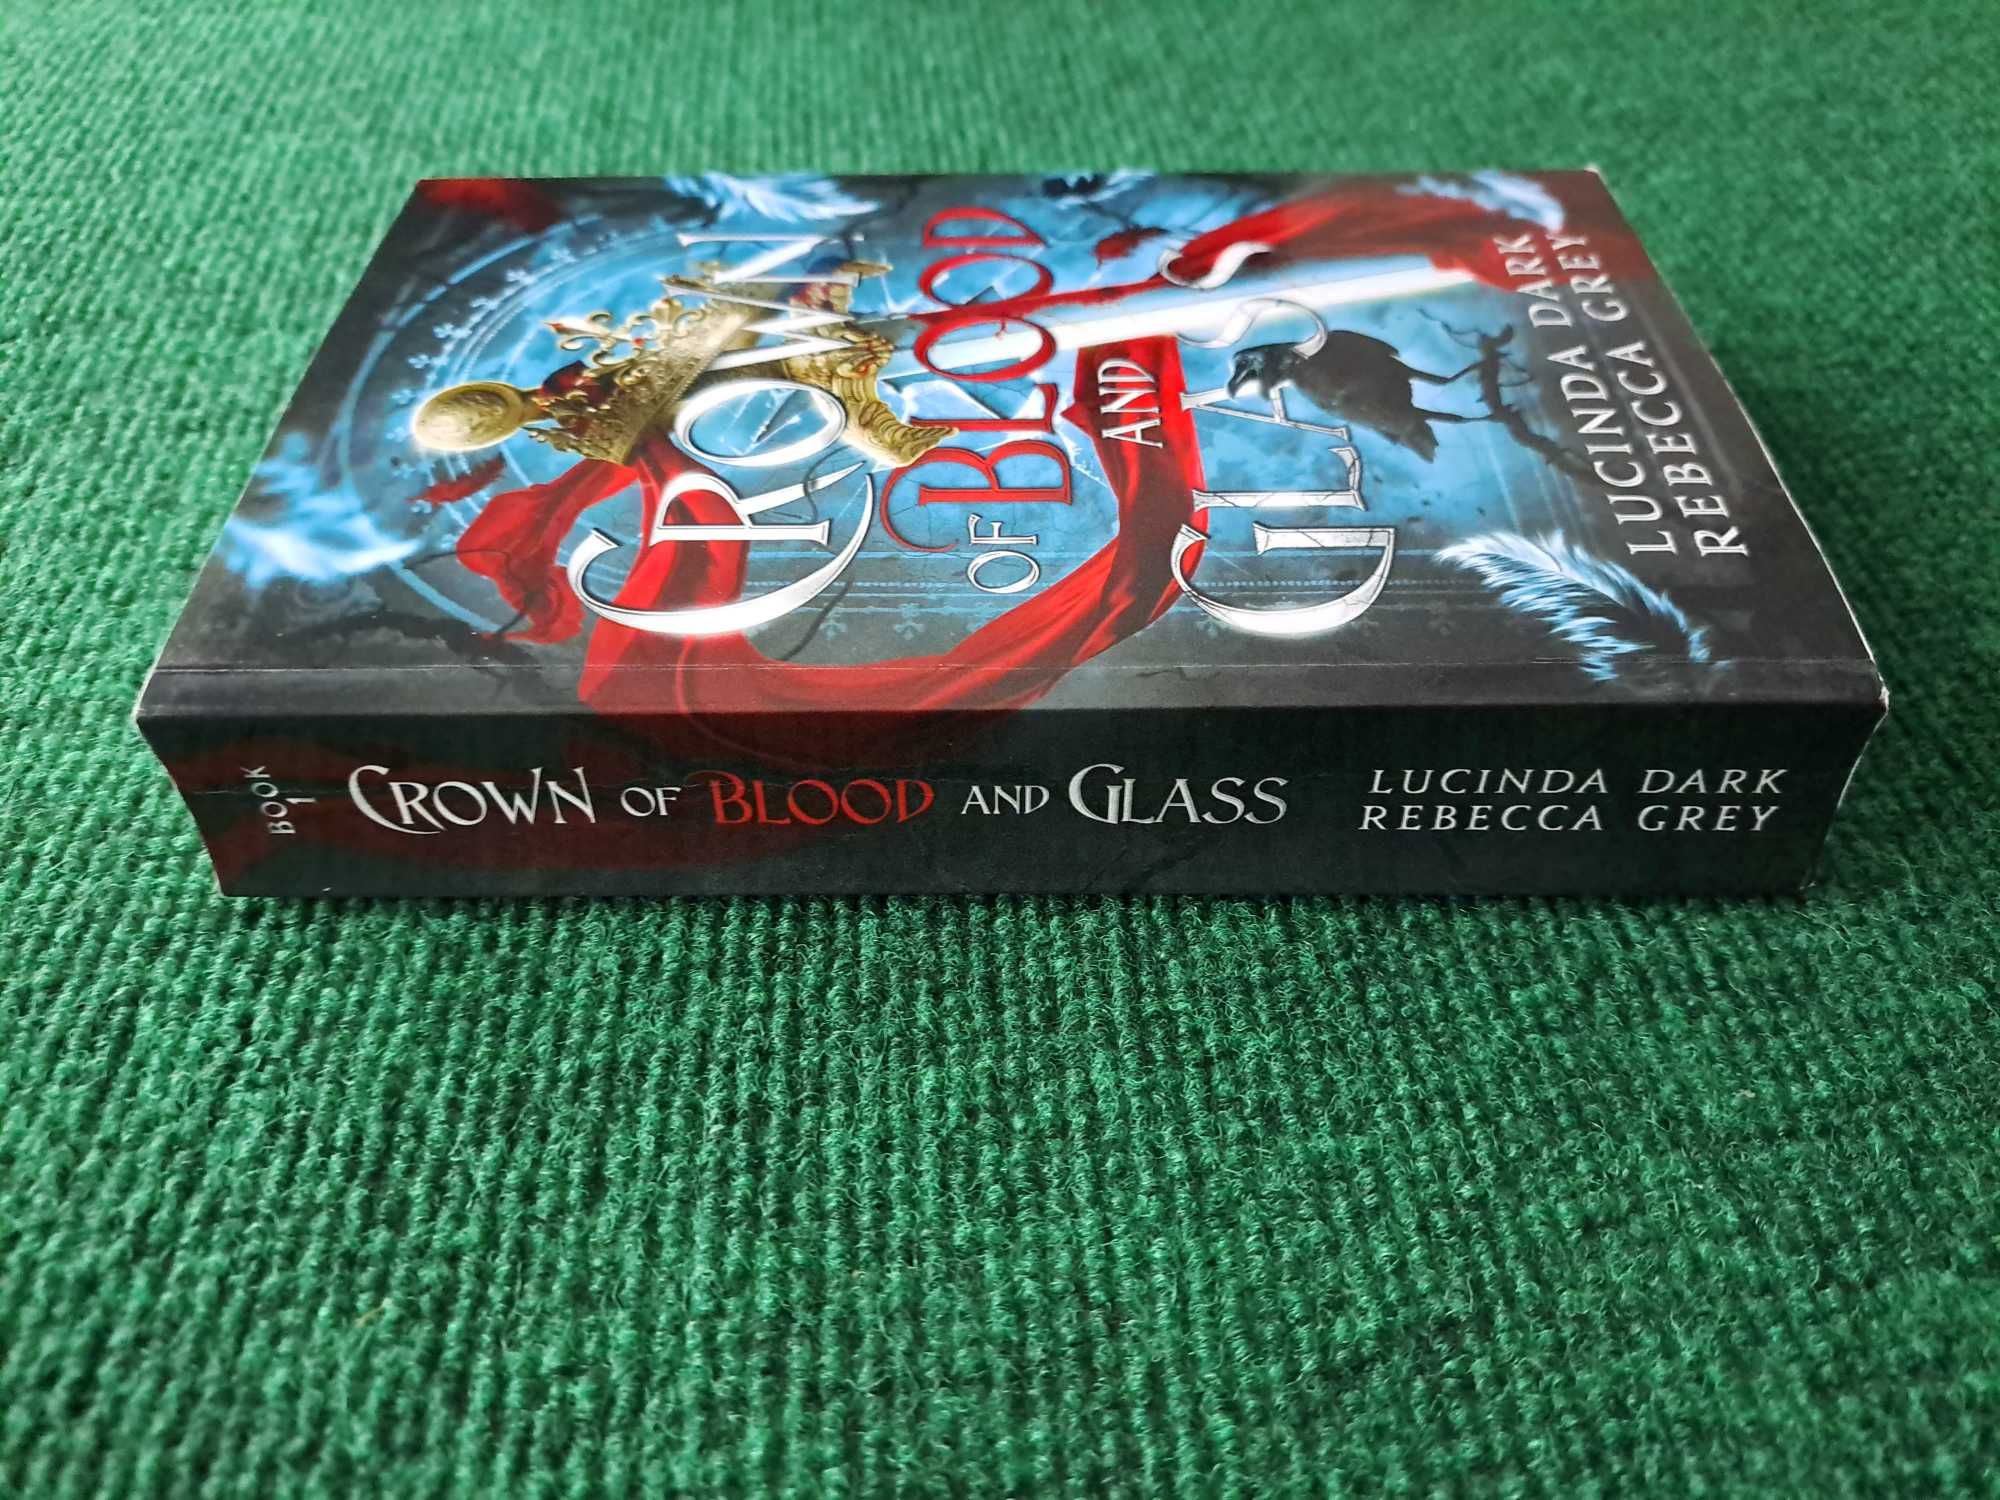 Crown of Blood and Glass - Lucinda Dark / Rebecca Grey